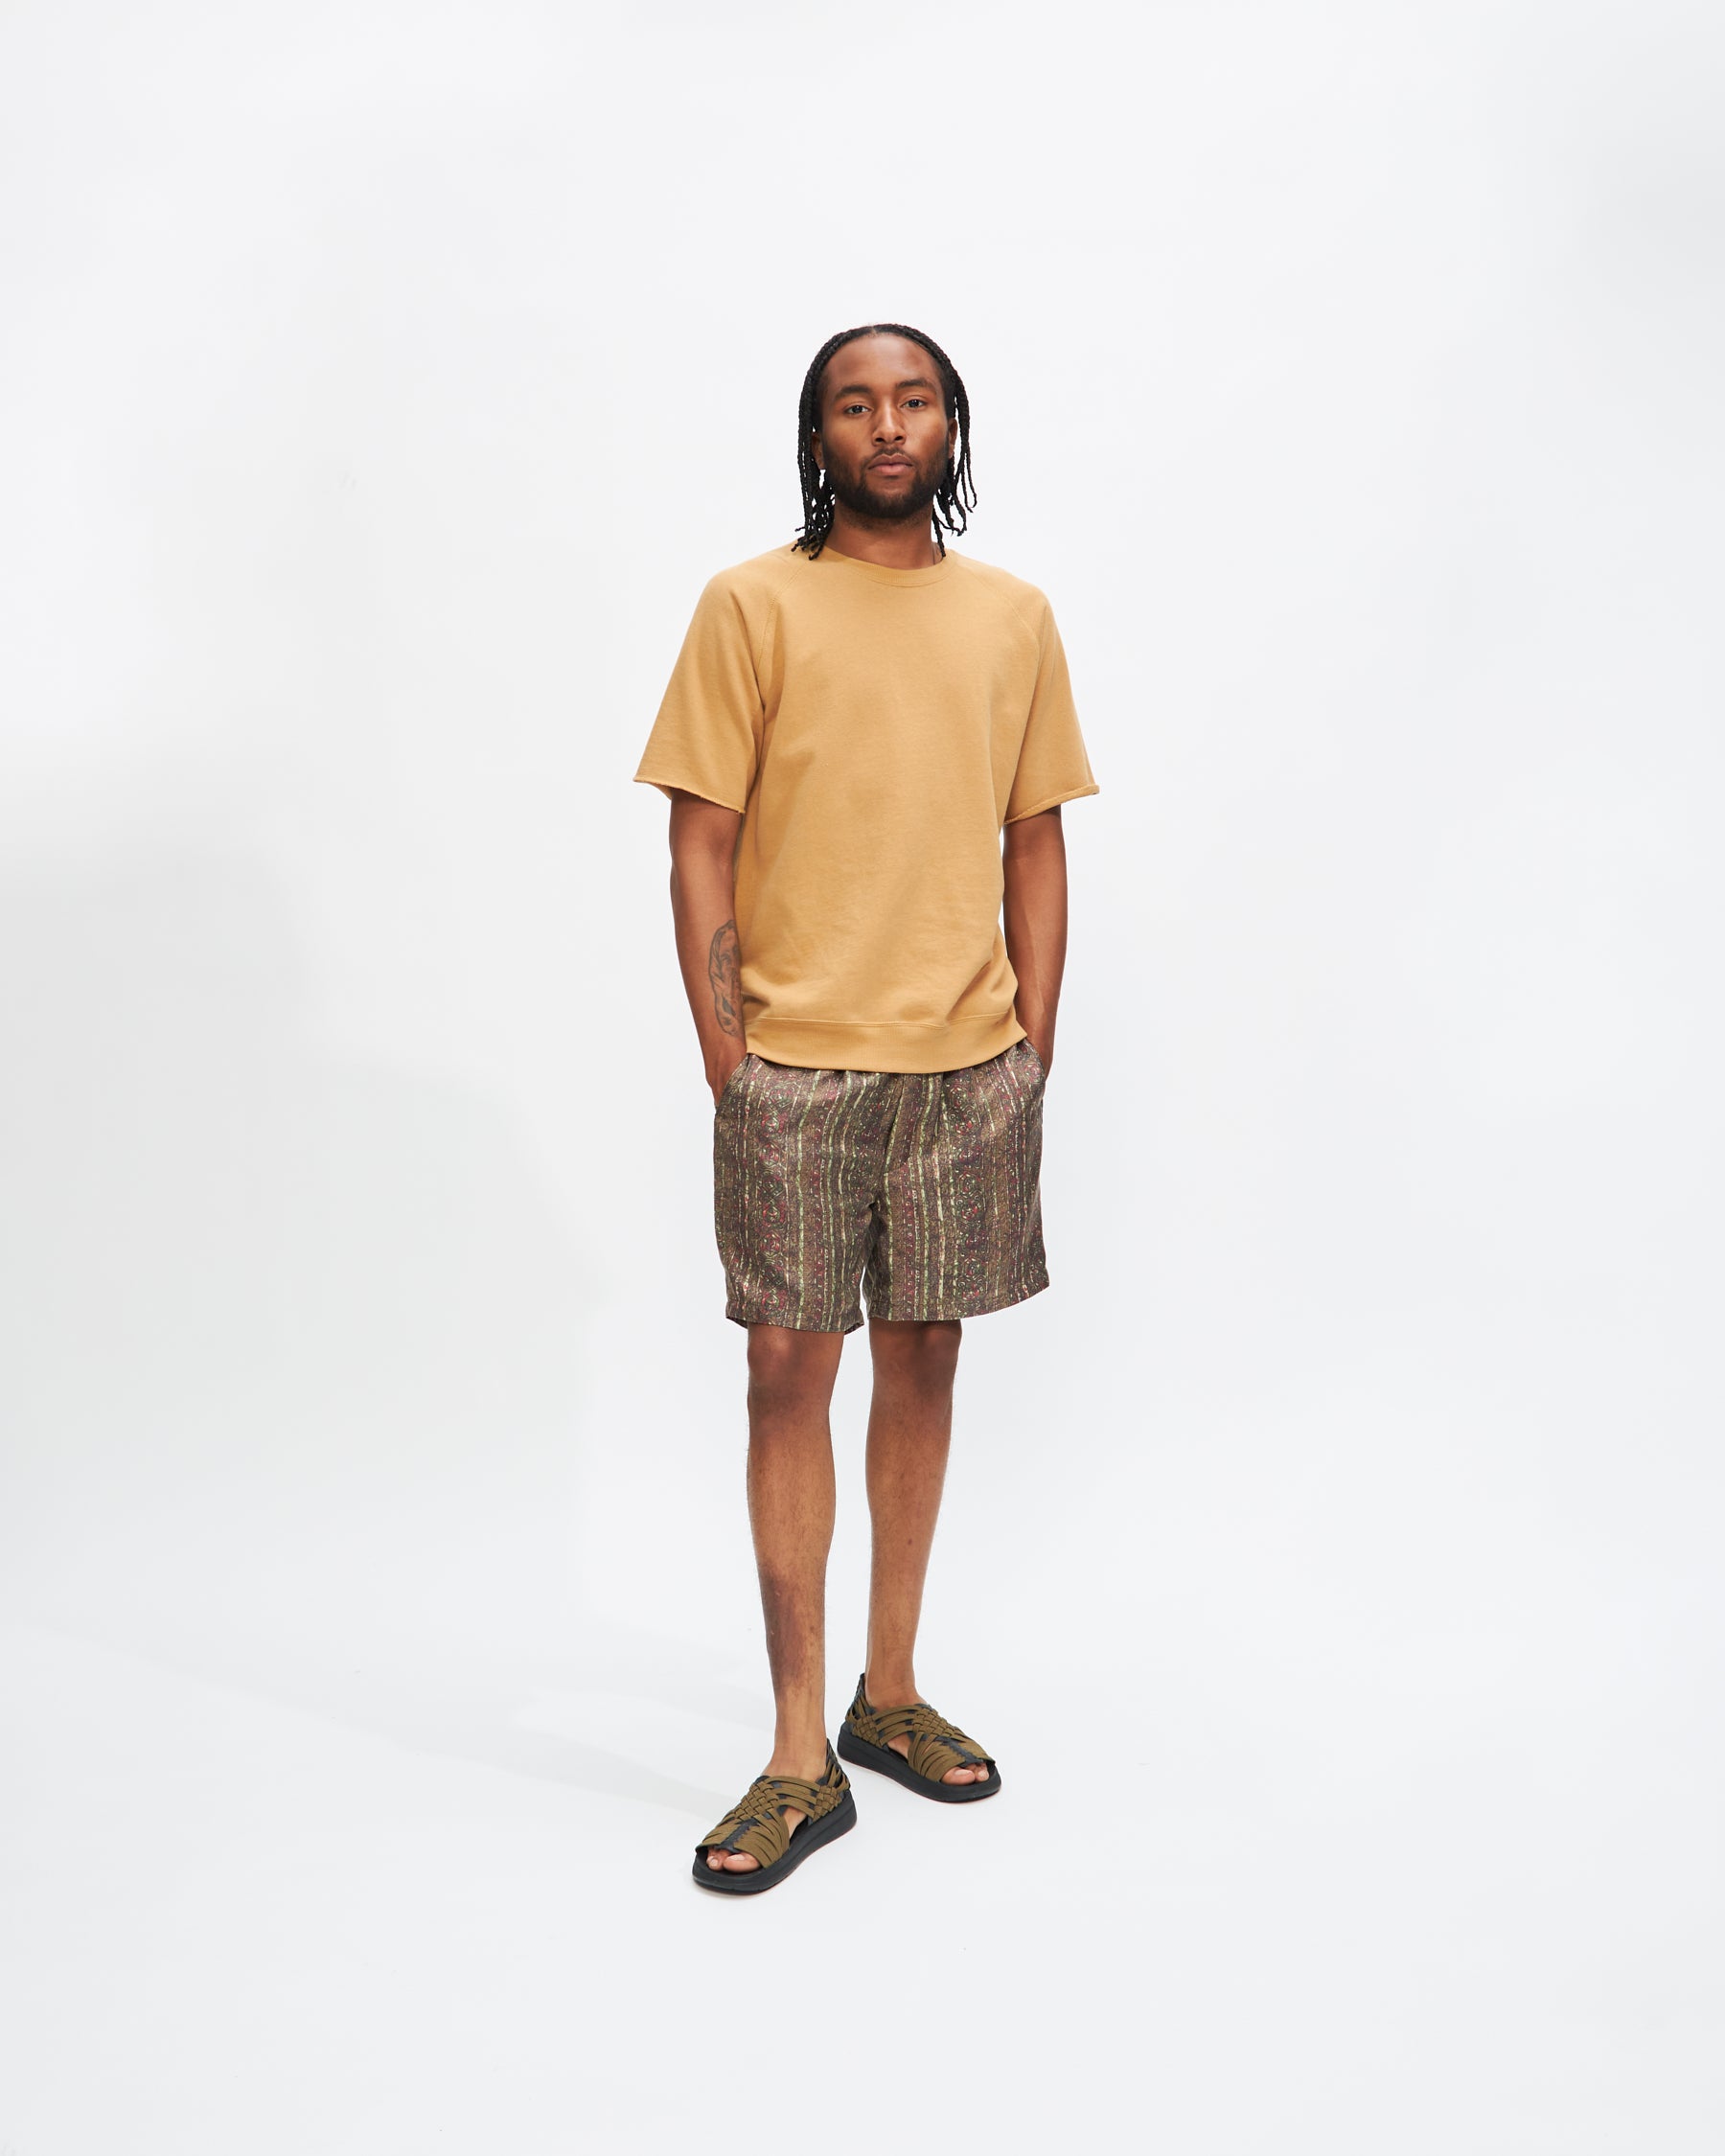 Beach Shorts Silk Batik Print